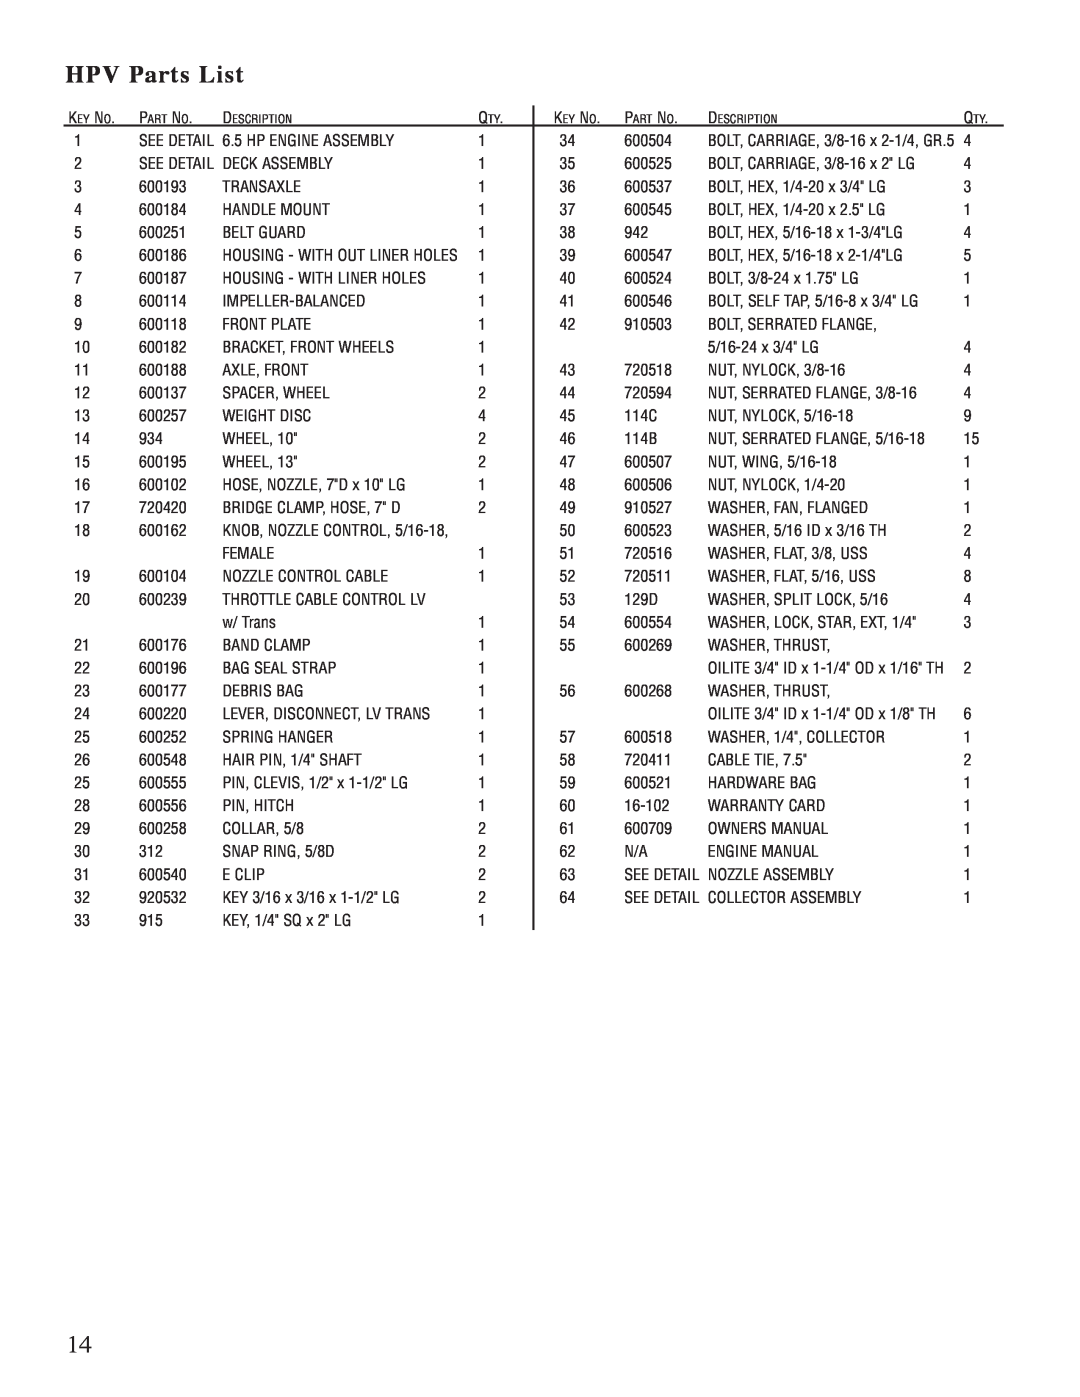 Little Wonder 5621, 5631 manual HPV Parts List 